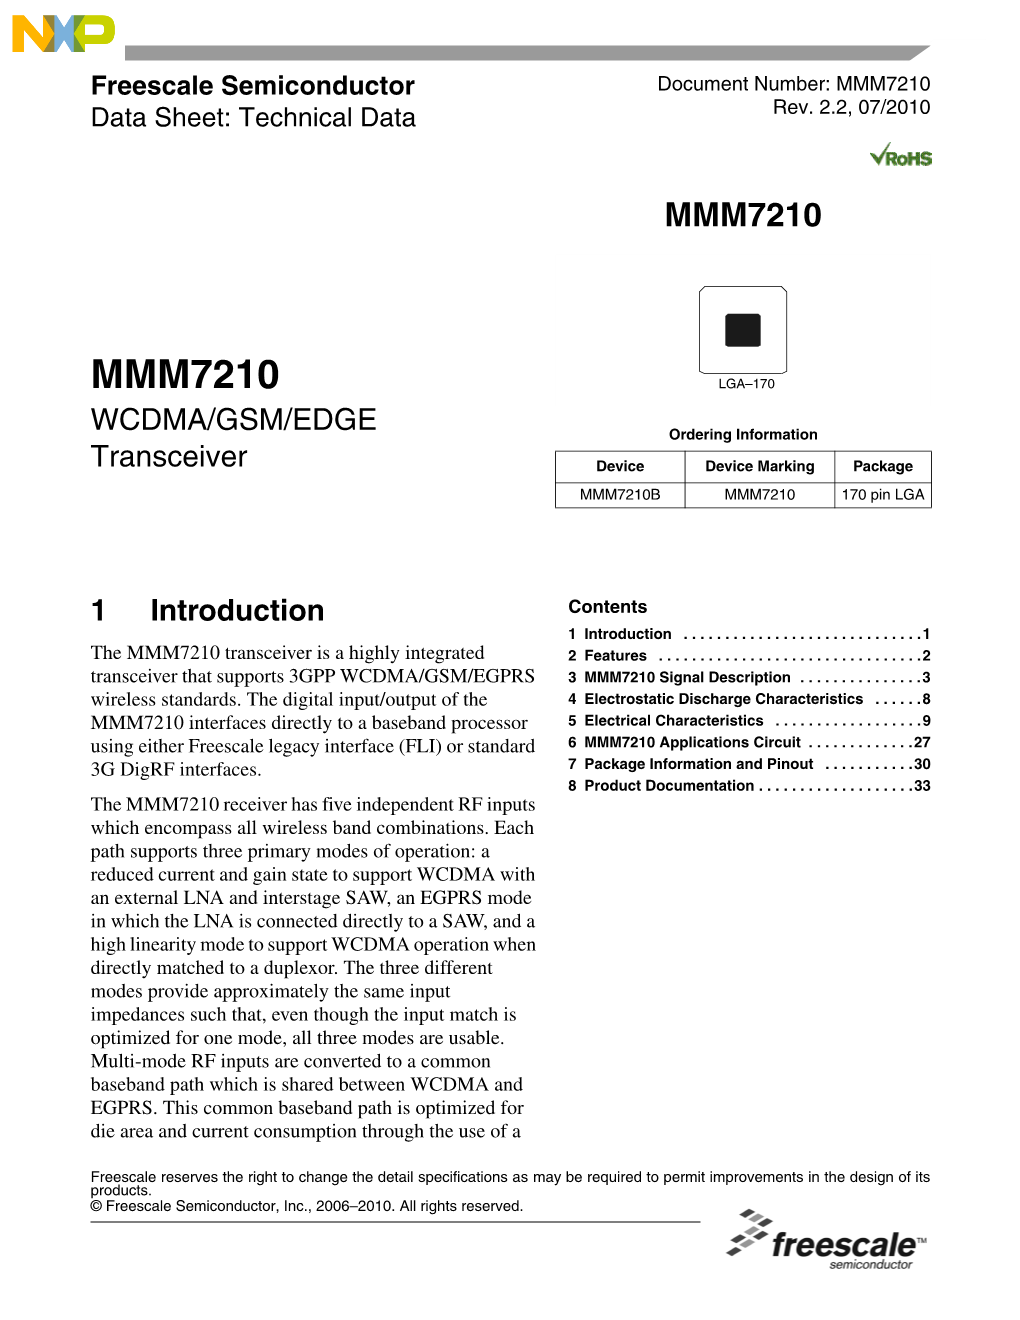 MMM7210 WCDMA/GSM/EDGE Transceiver